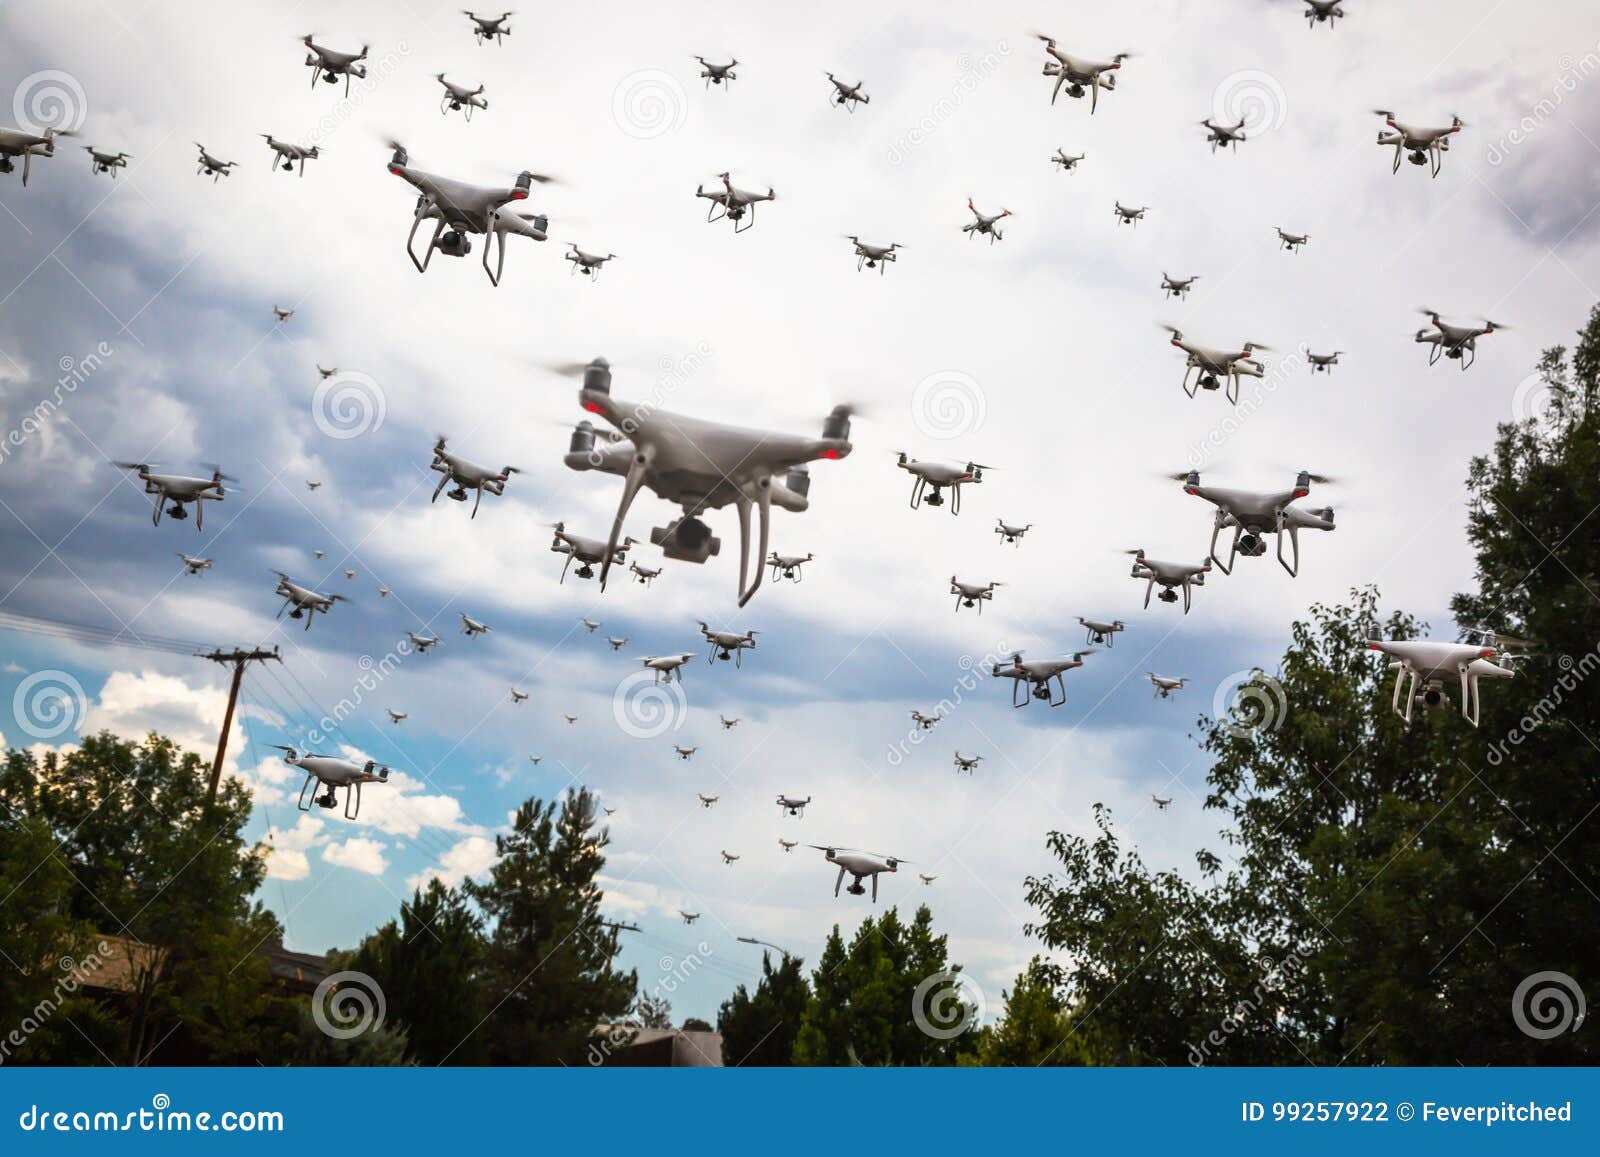 dozens of drones swarm in the ominous sky.